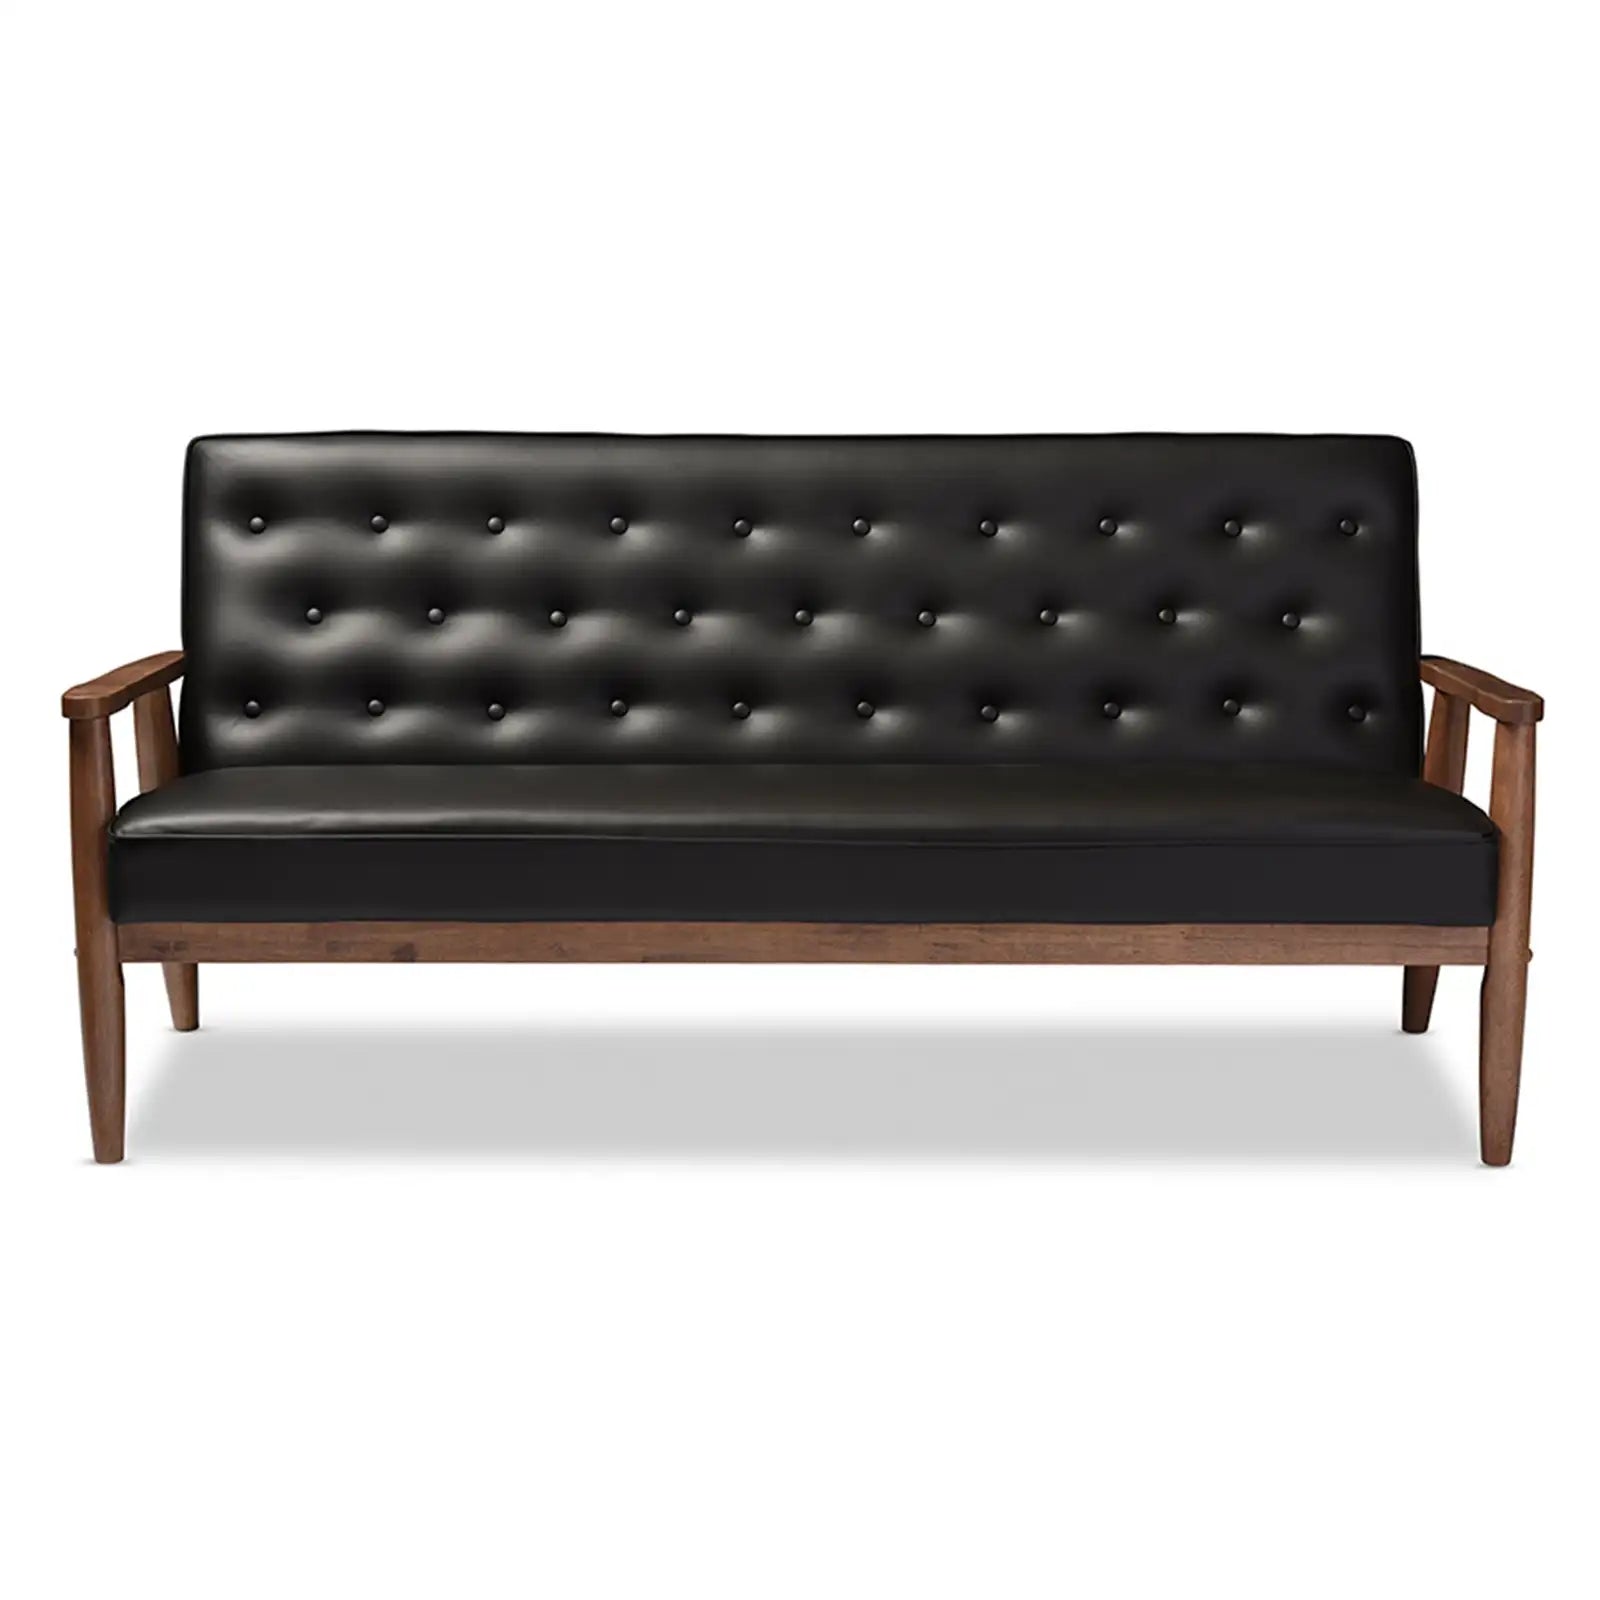 Mid-Century Retro Modern Fabric Upholstered Wooden 3-Seater Sofa